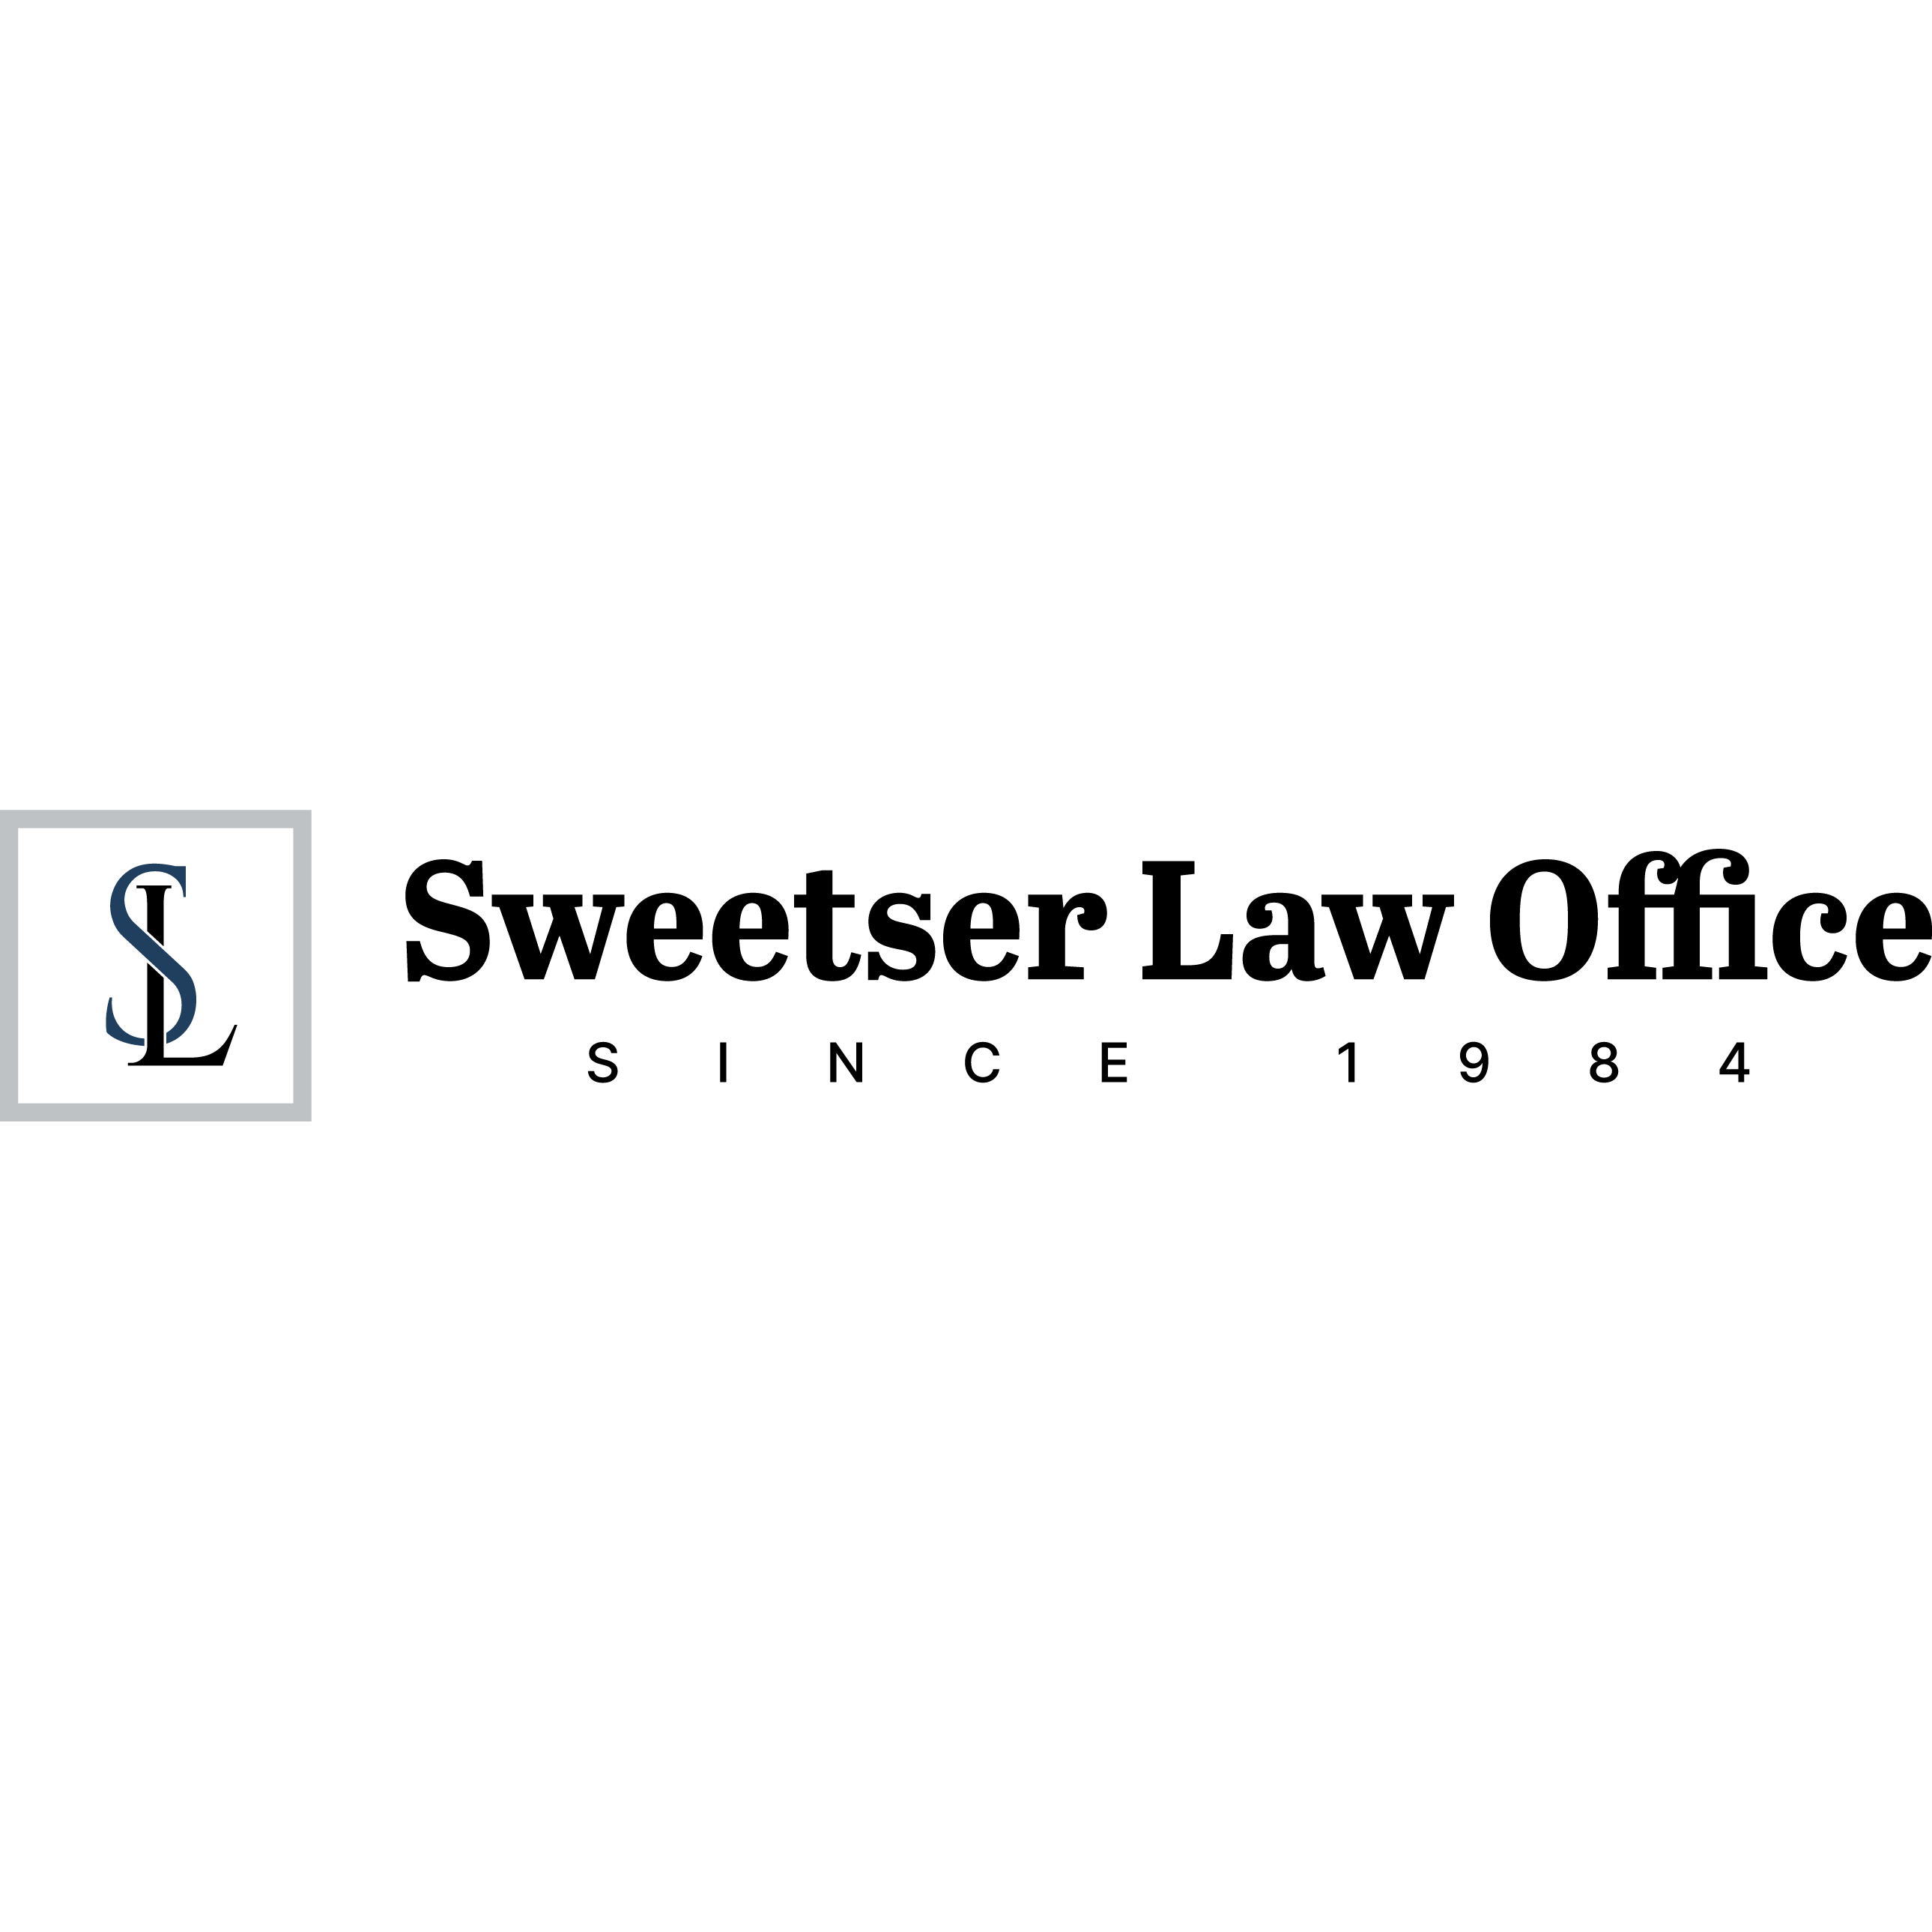 Sweetser Law Office - Spokane, WA 99201 - (509)444-4444 | ShowMeLocal.com